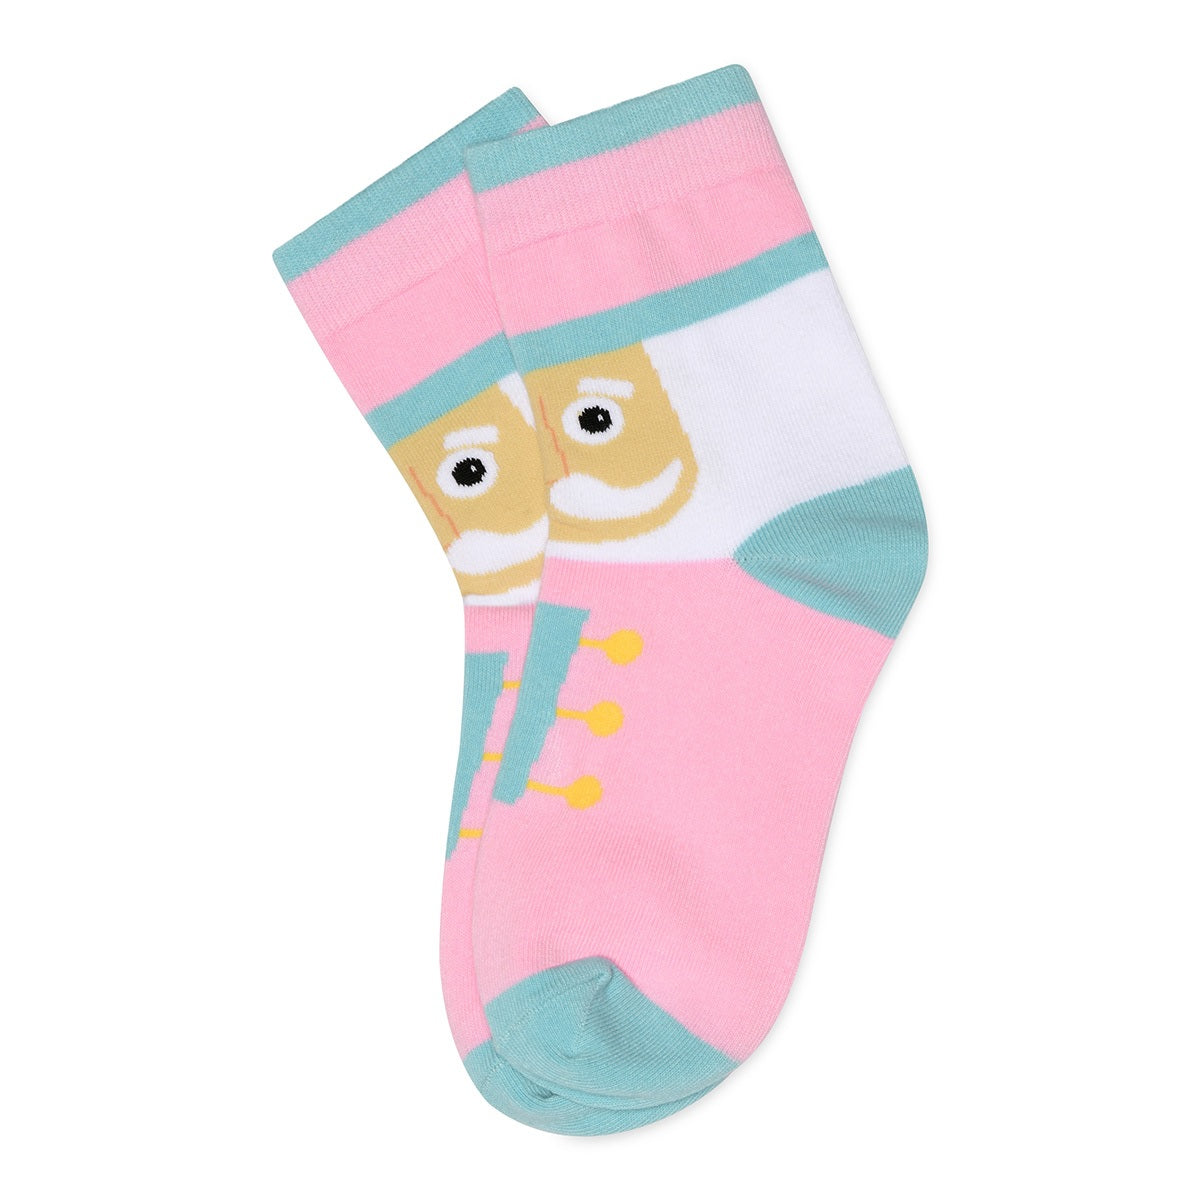 Socks Ornament - Nutcracker